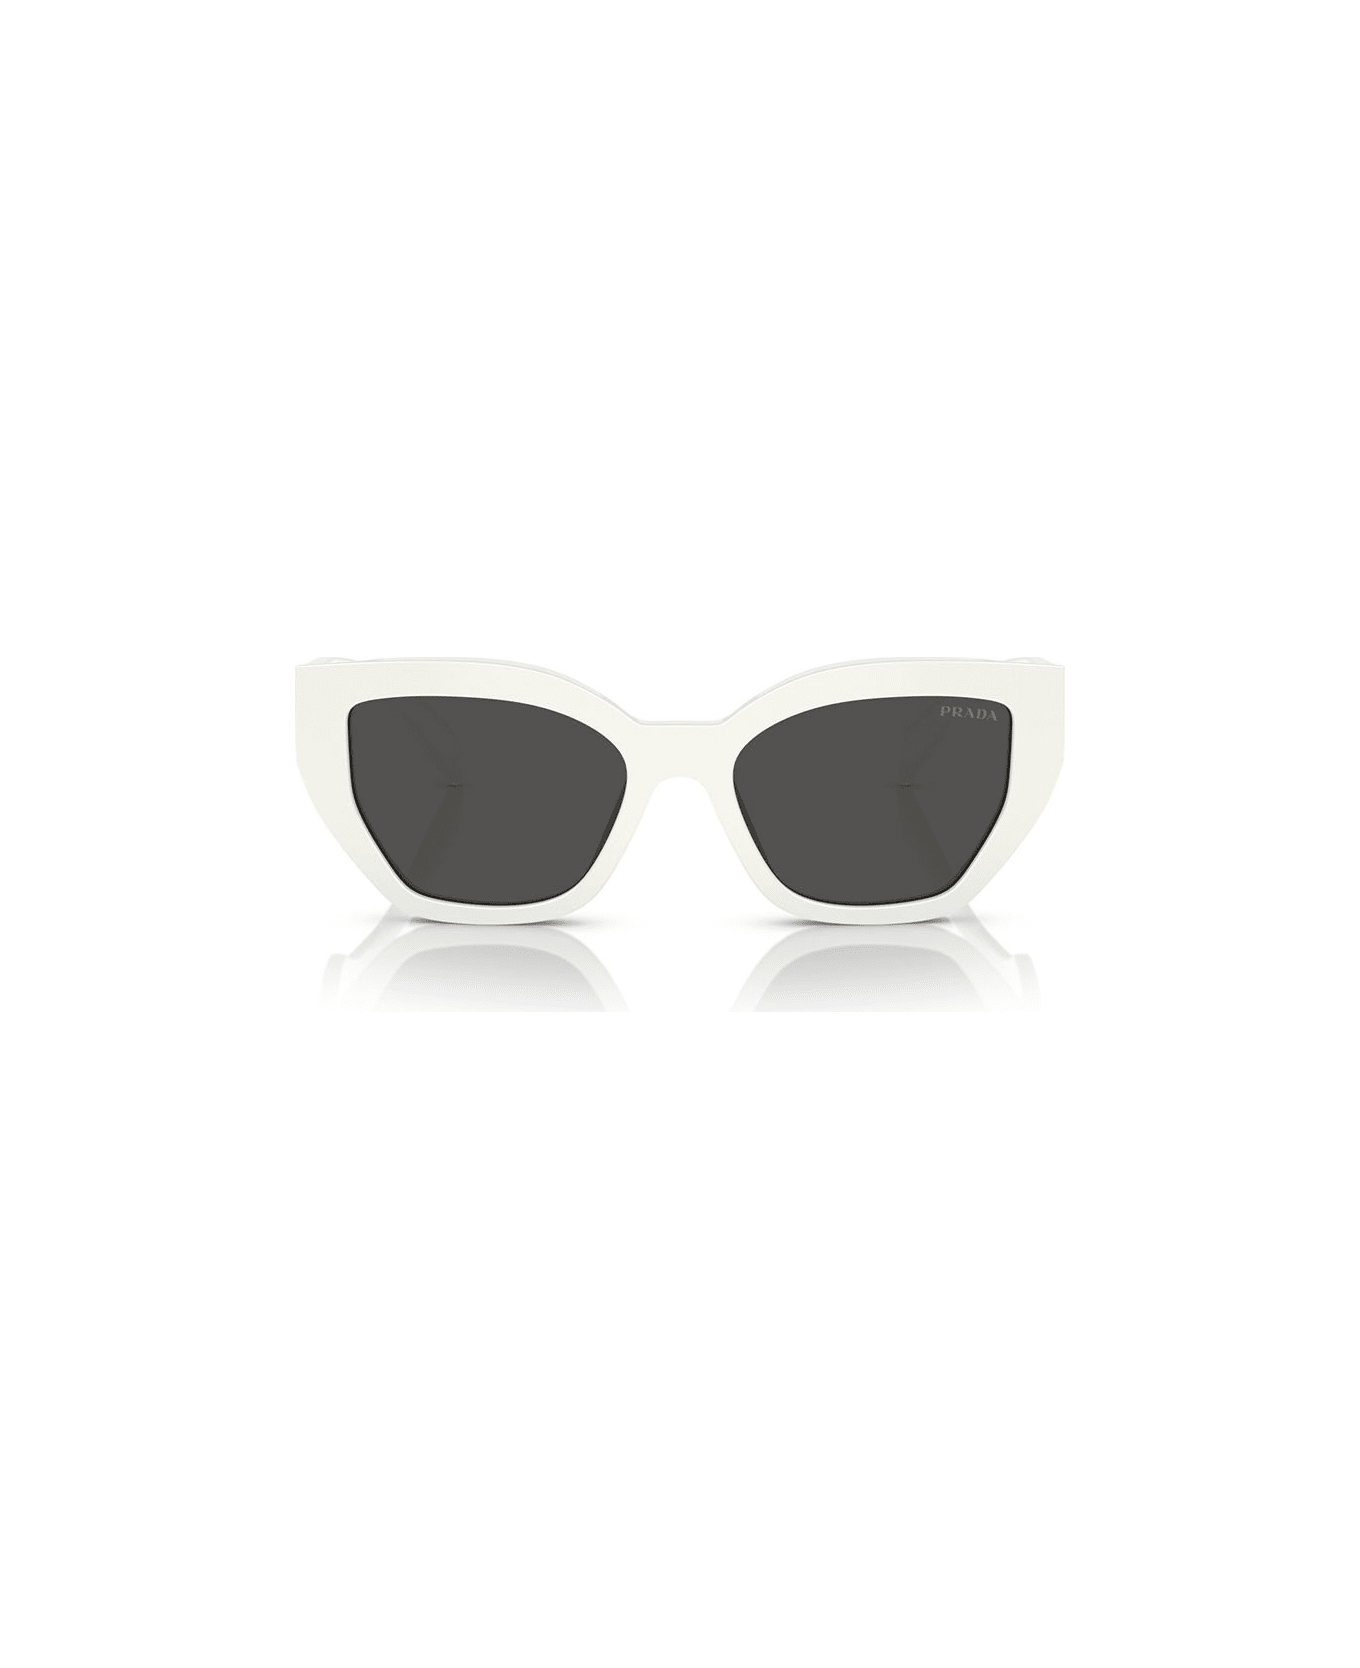 Prada Eyewear Sole Sunglasses - 1425S0 サングラス